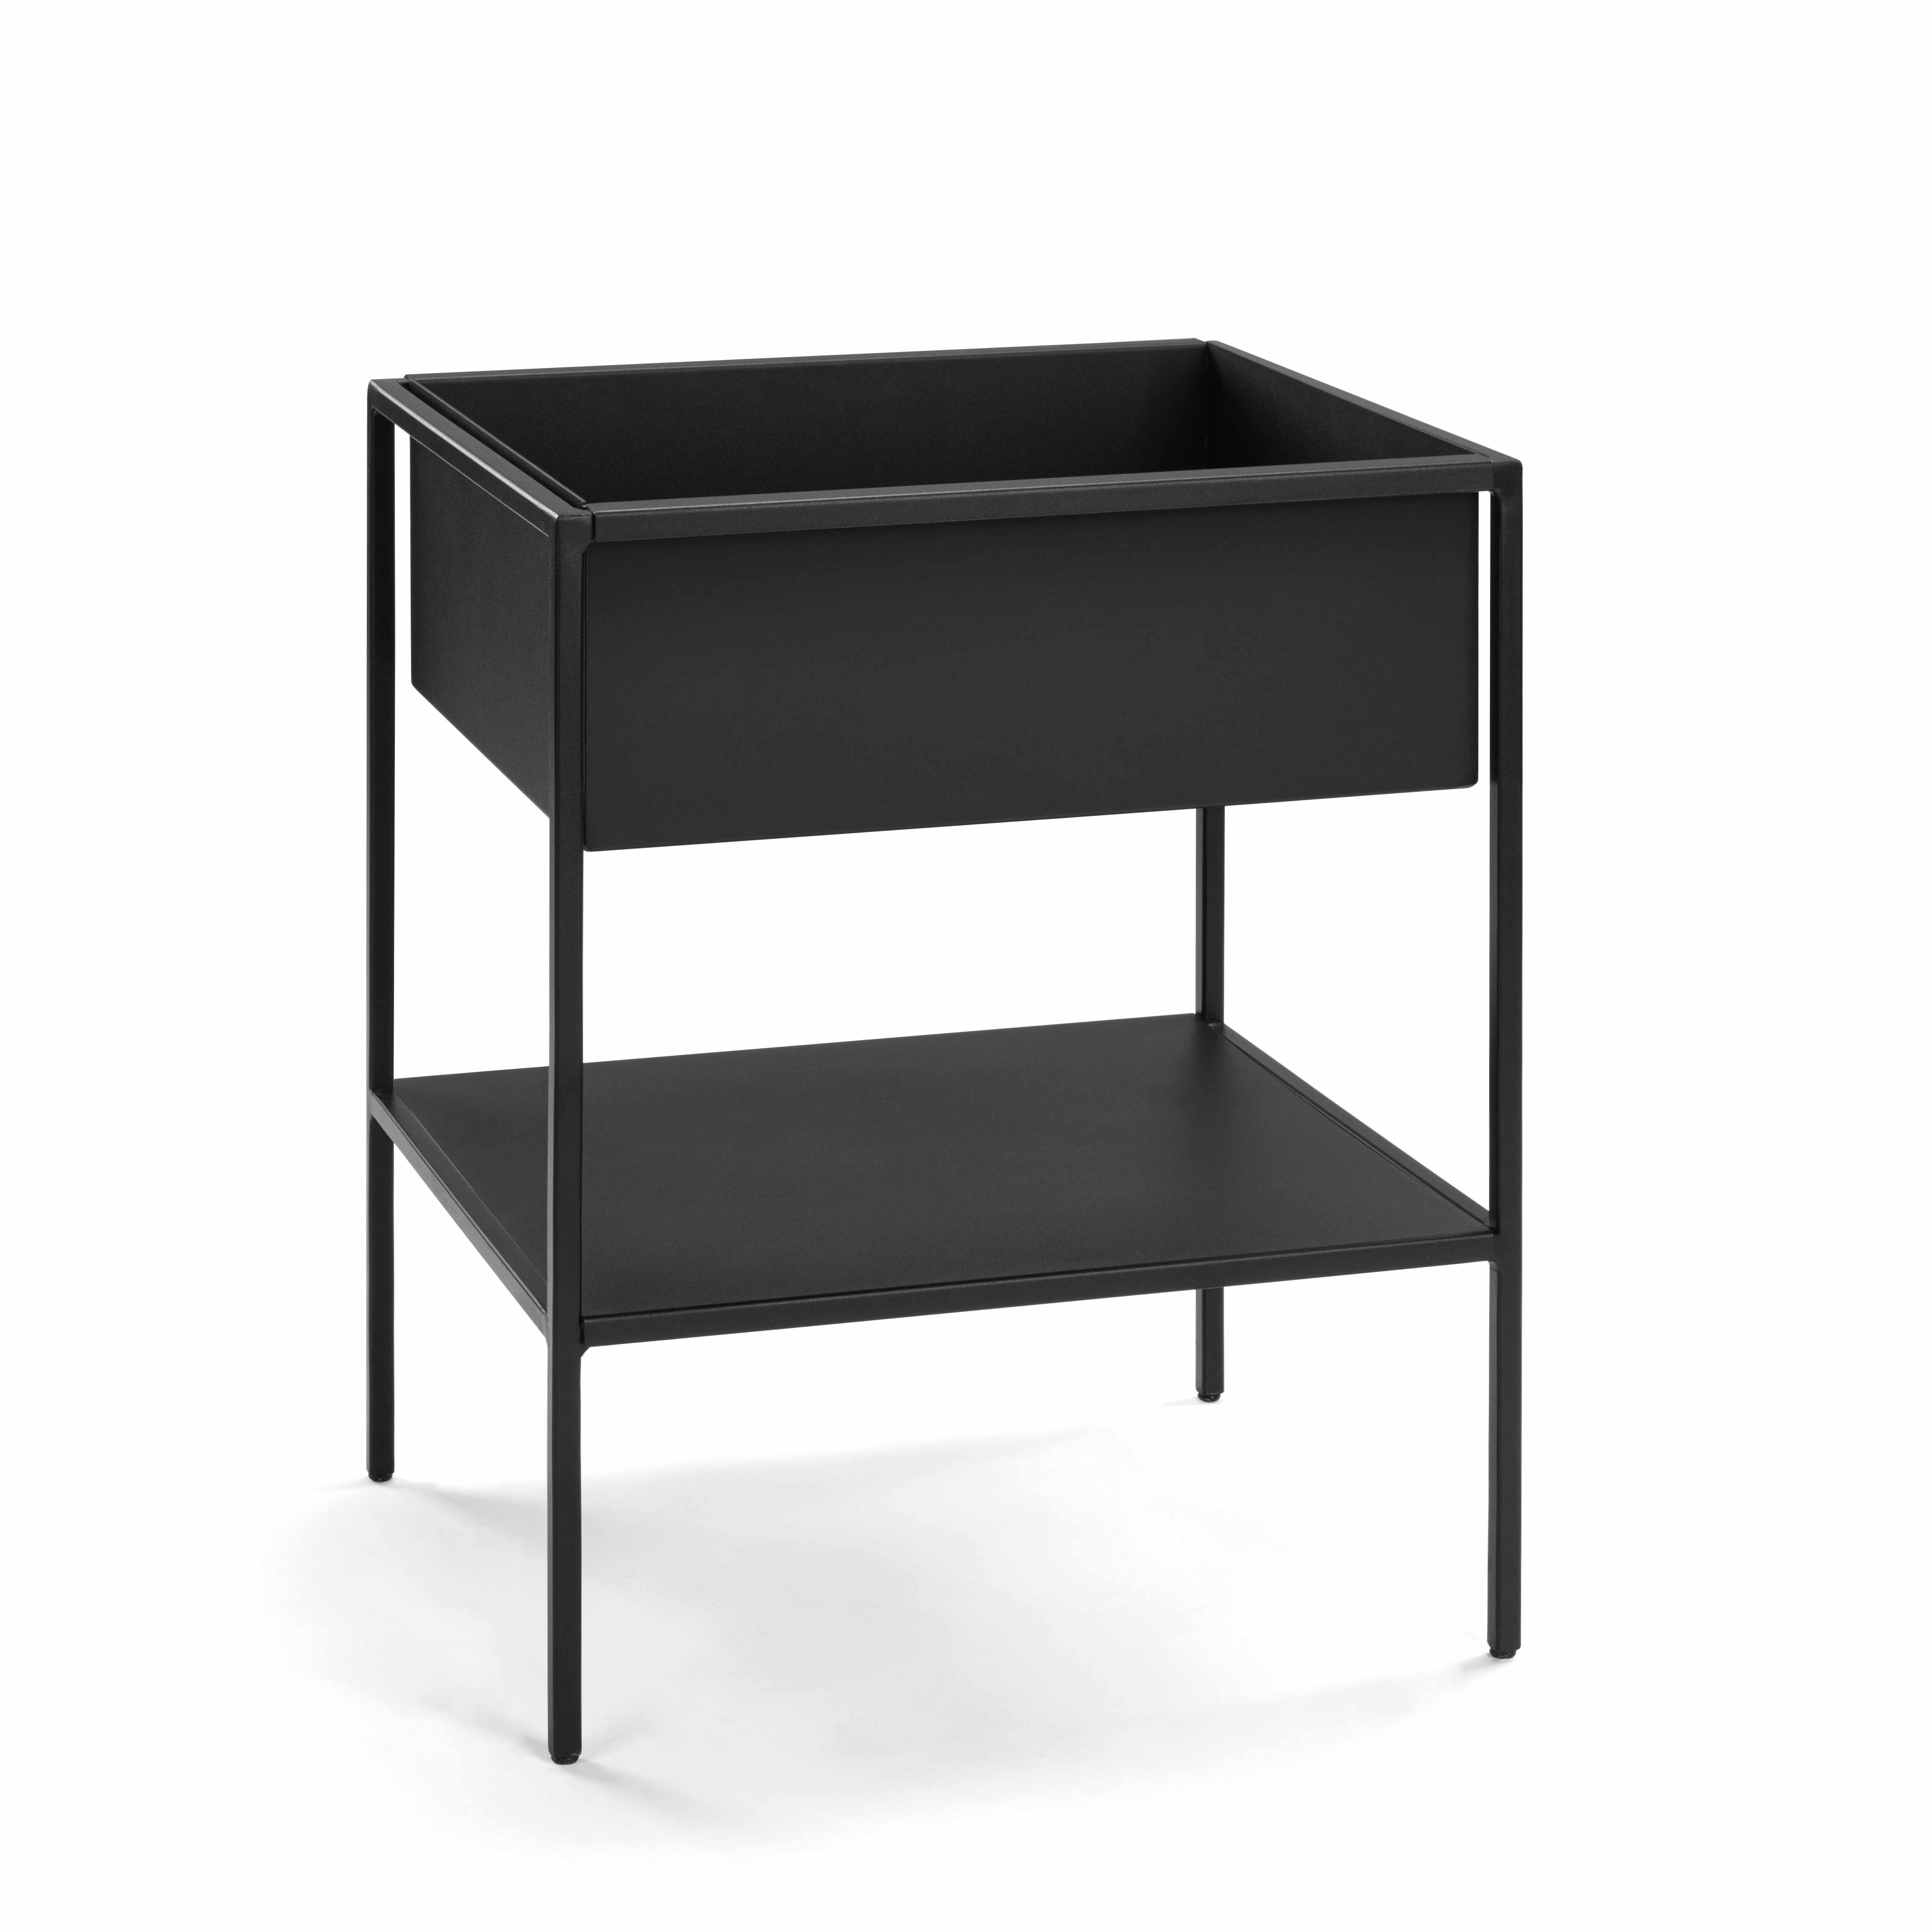 WS - Urban side table - 1x planter, 1x shelf - Black